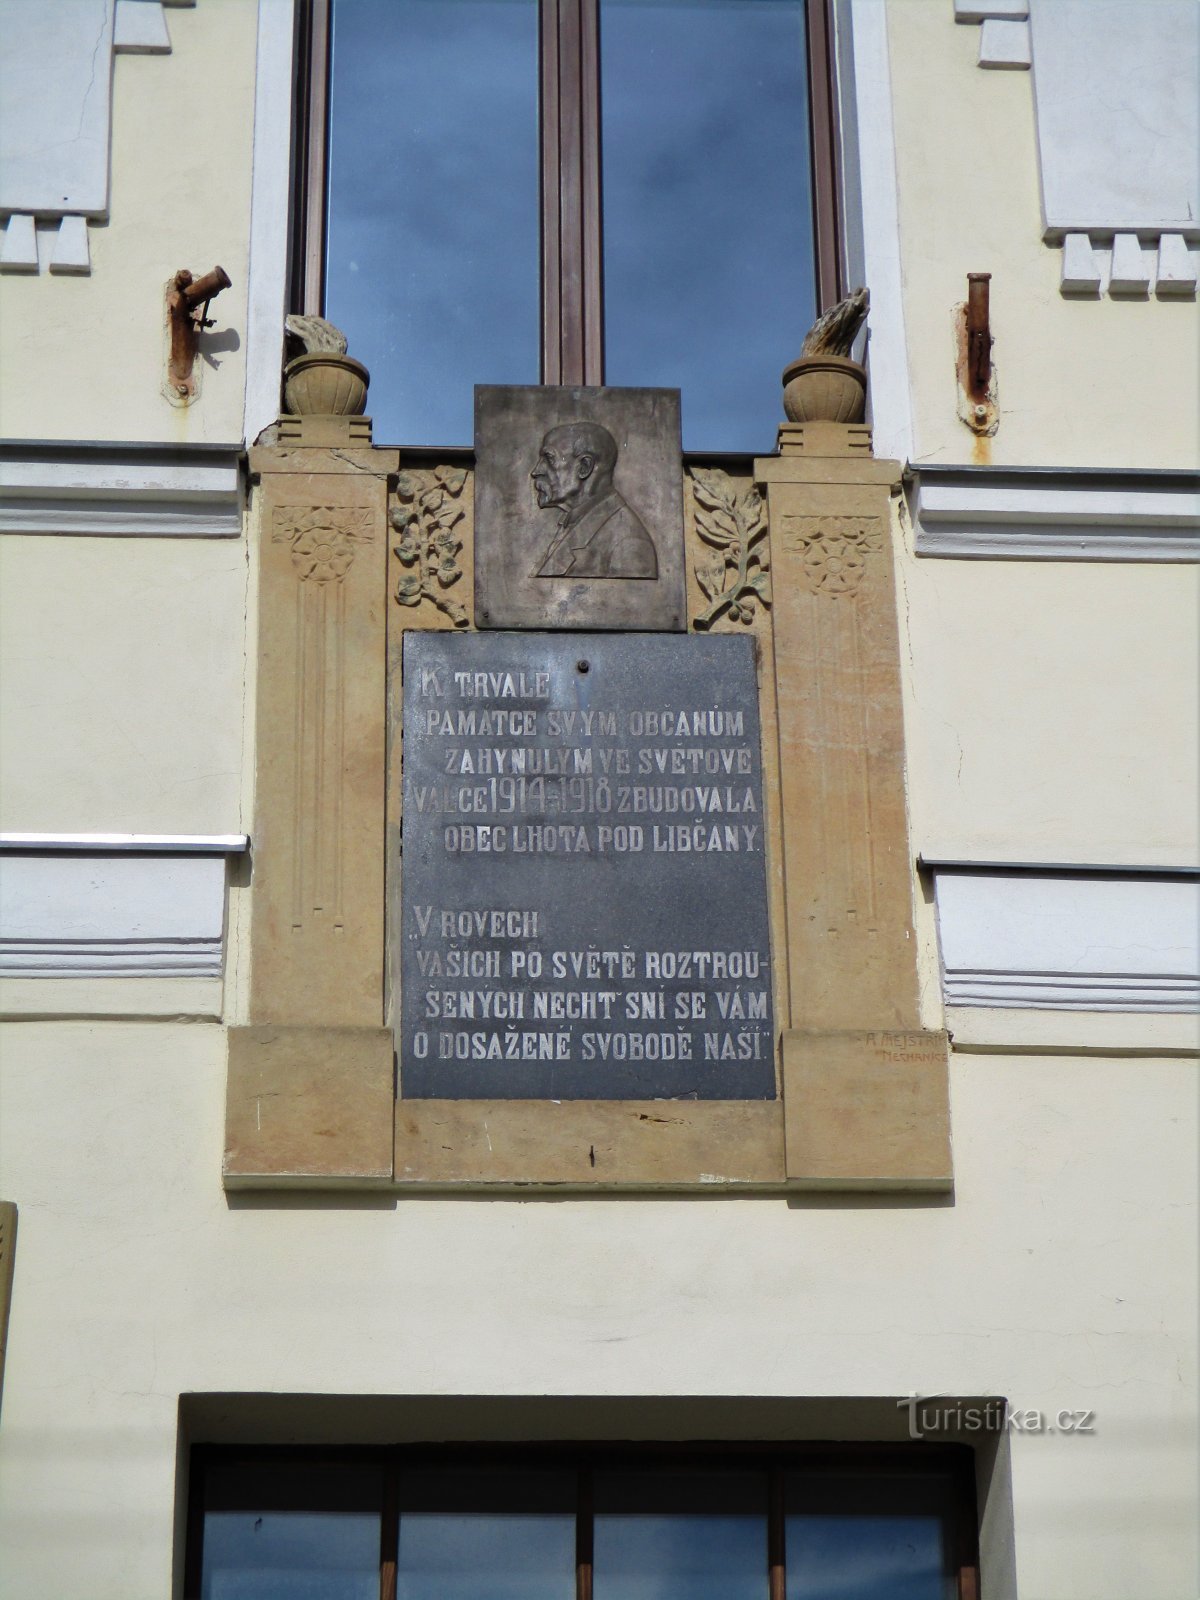 Targa commemorativa presso la scuola (Lhota pod Libčany)